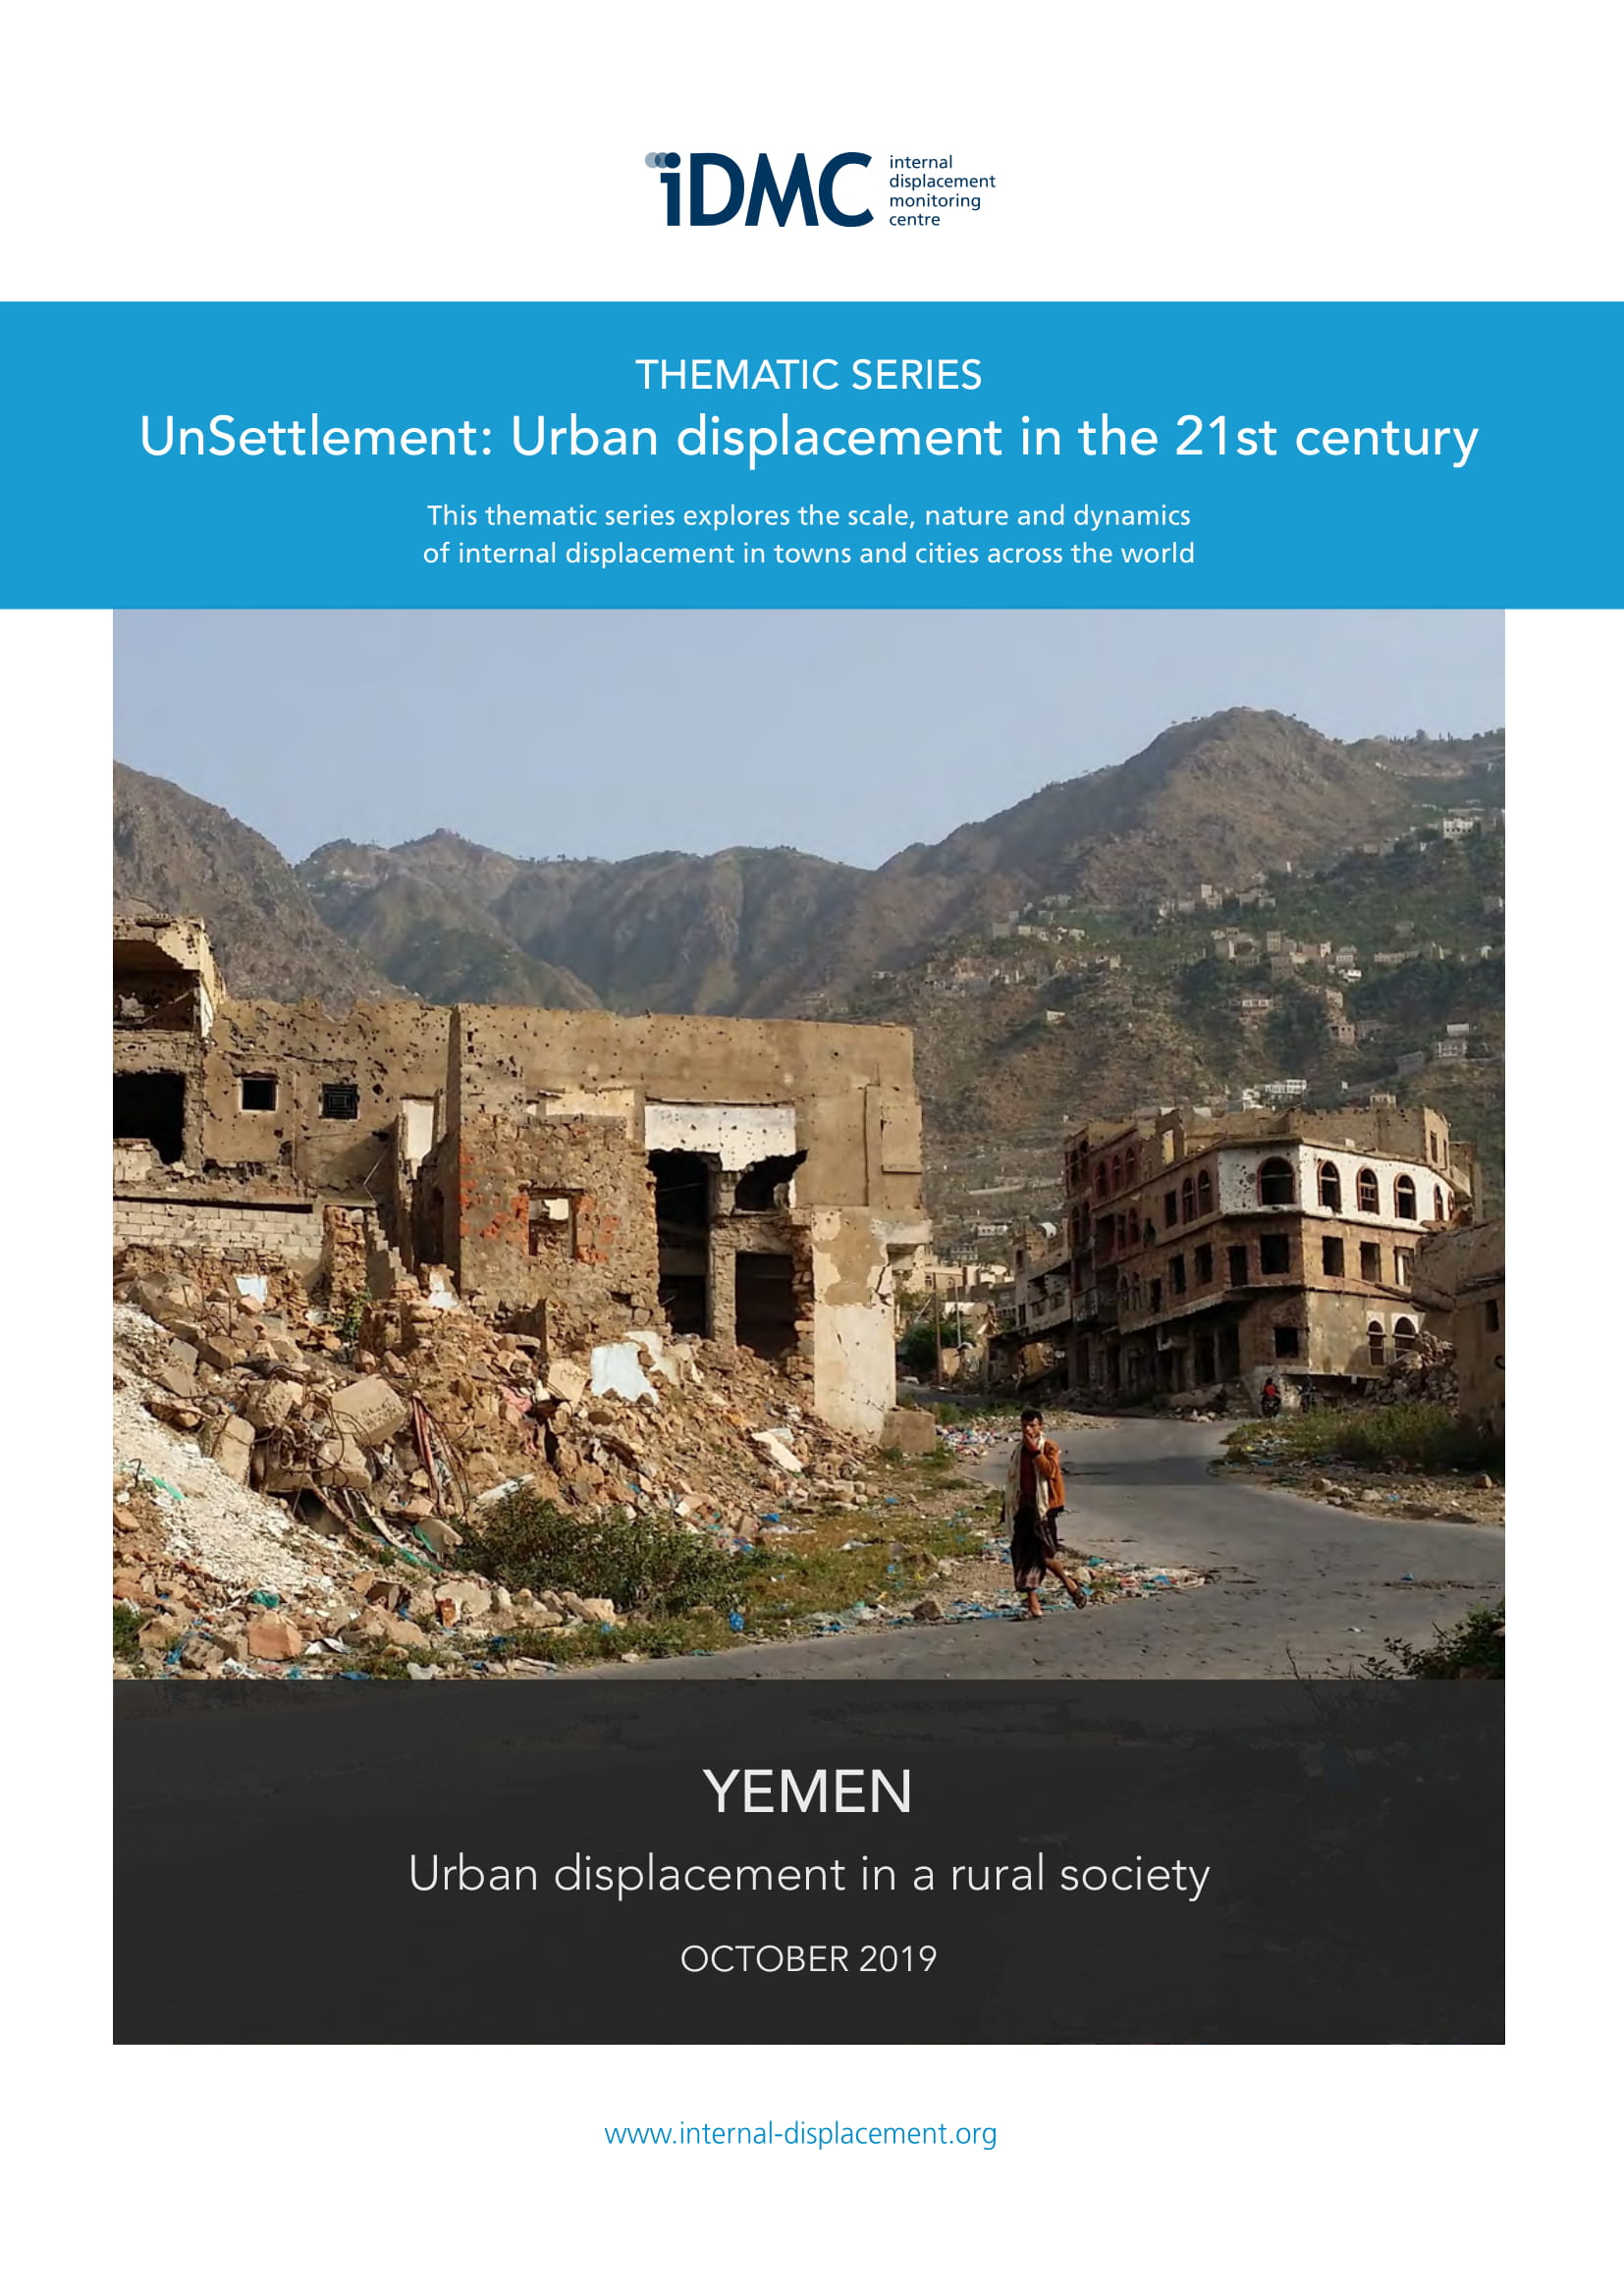 Yemen: Urban displacement in a rural society